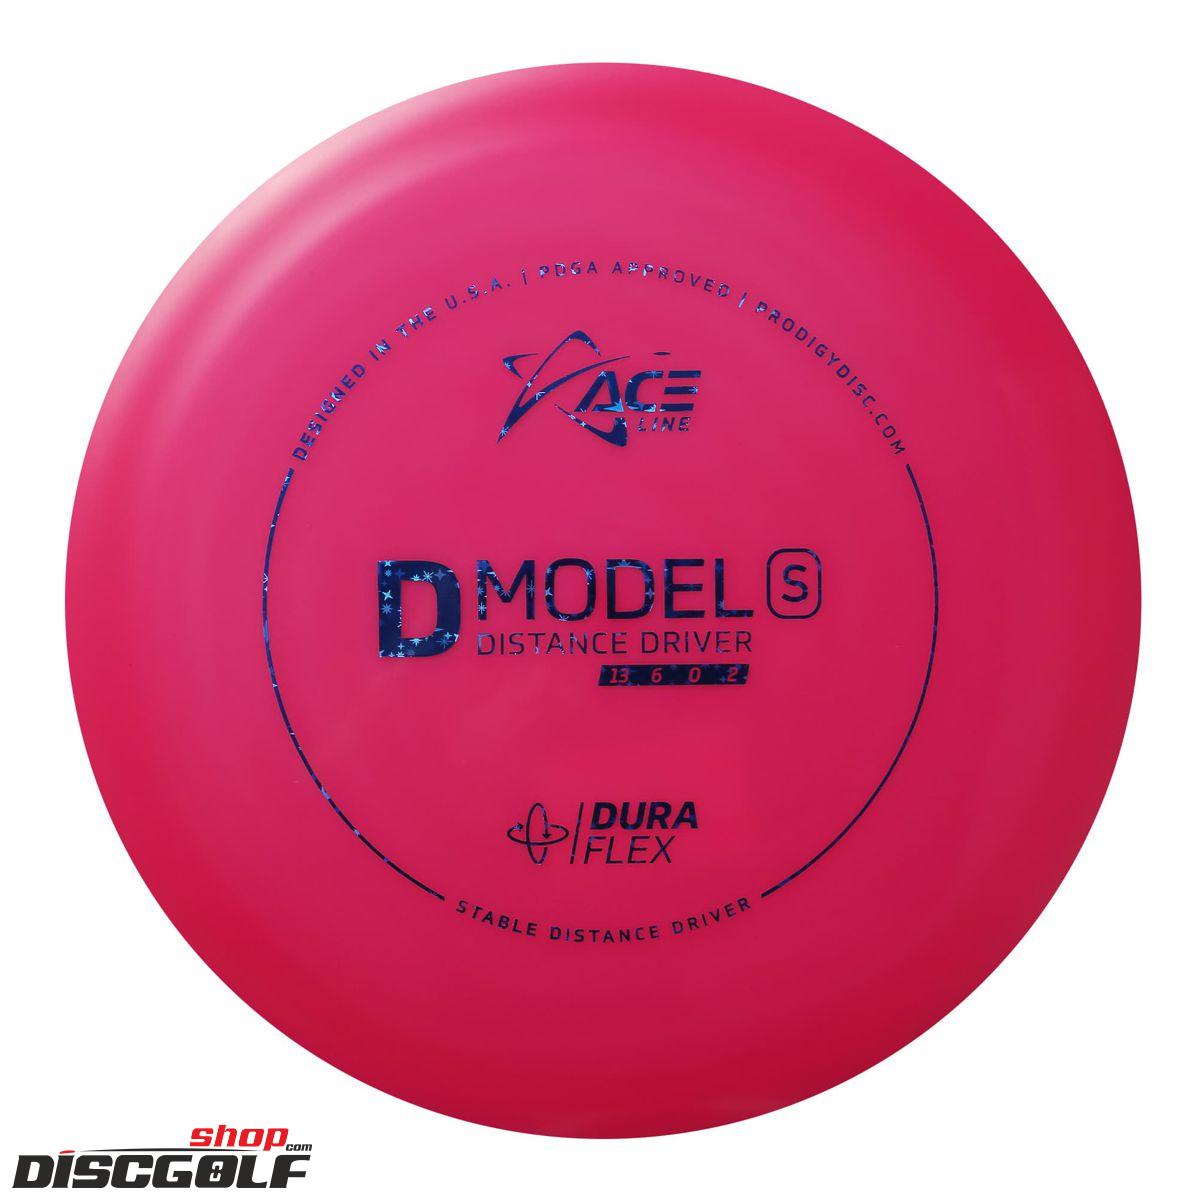 Prodigy D model S DuraFlex (discgolf)